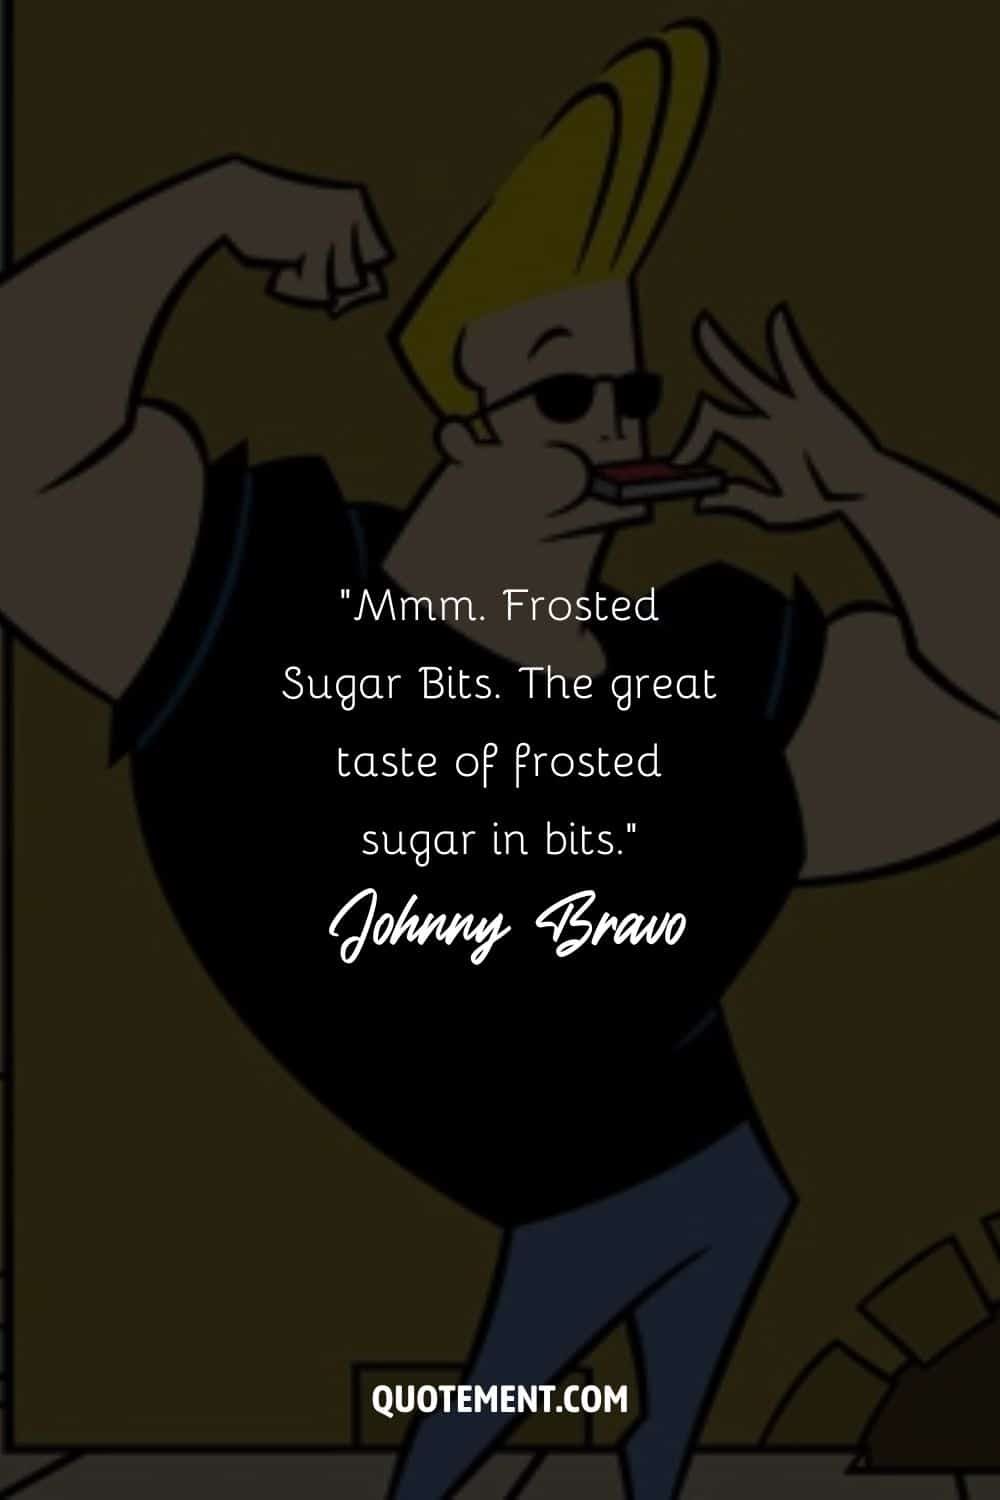 Johnny Bravo eating on the street
